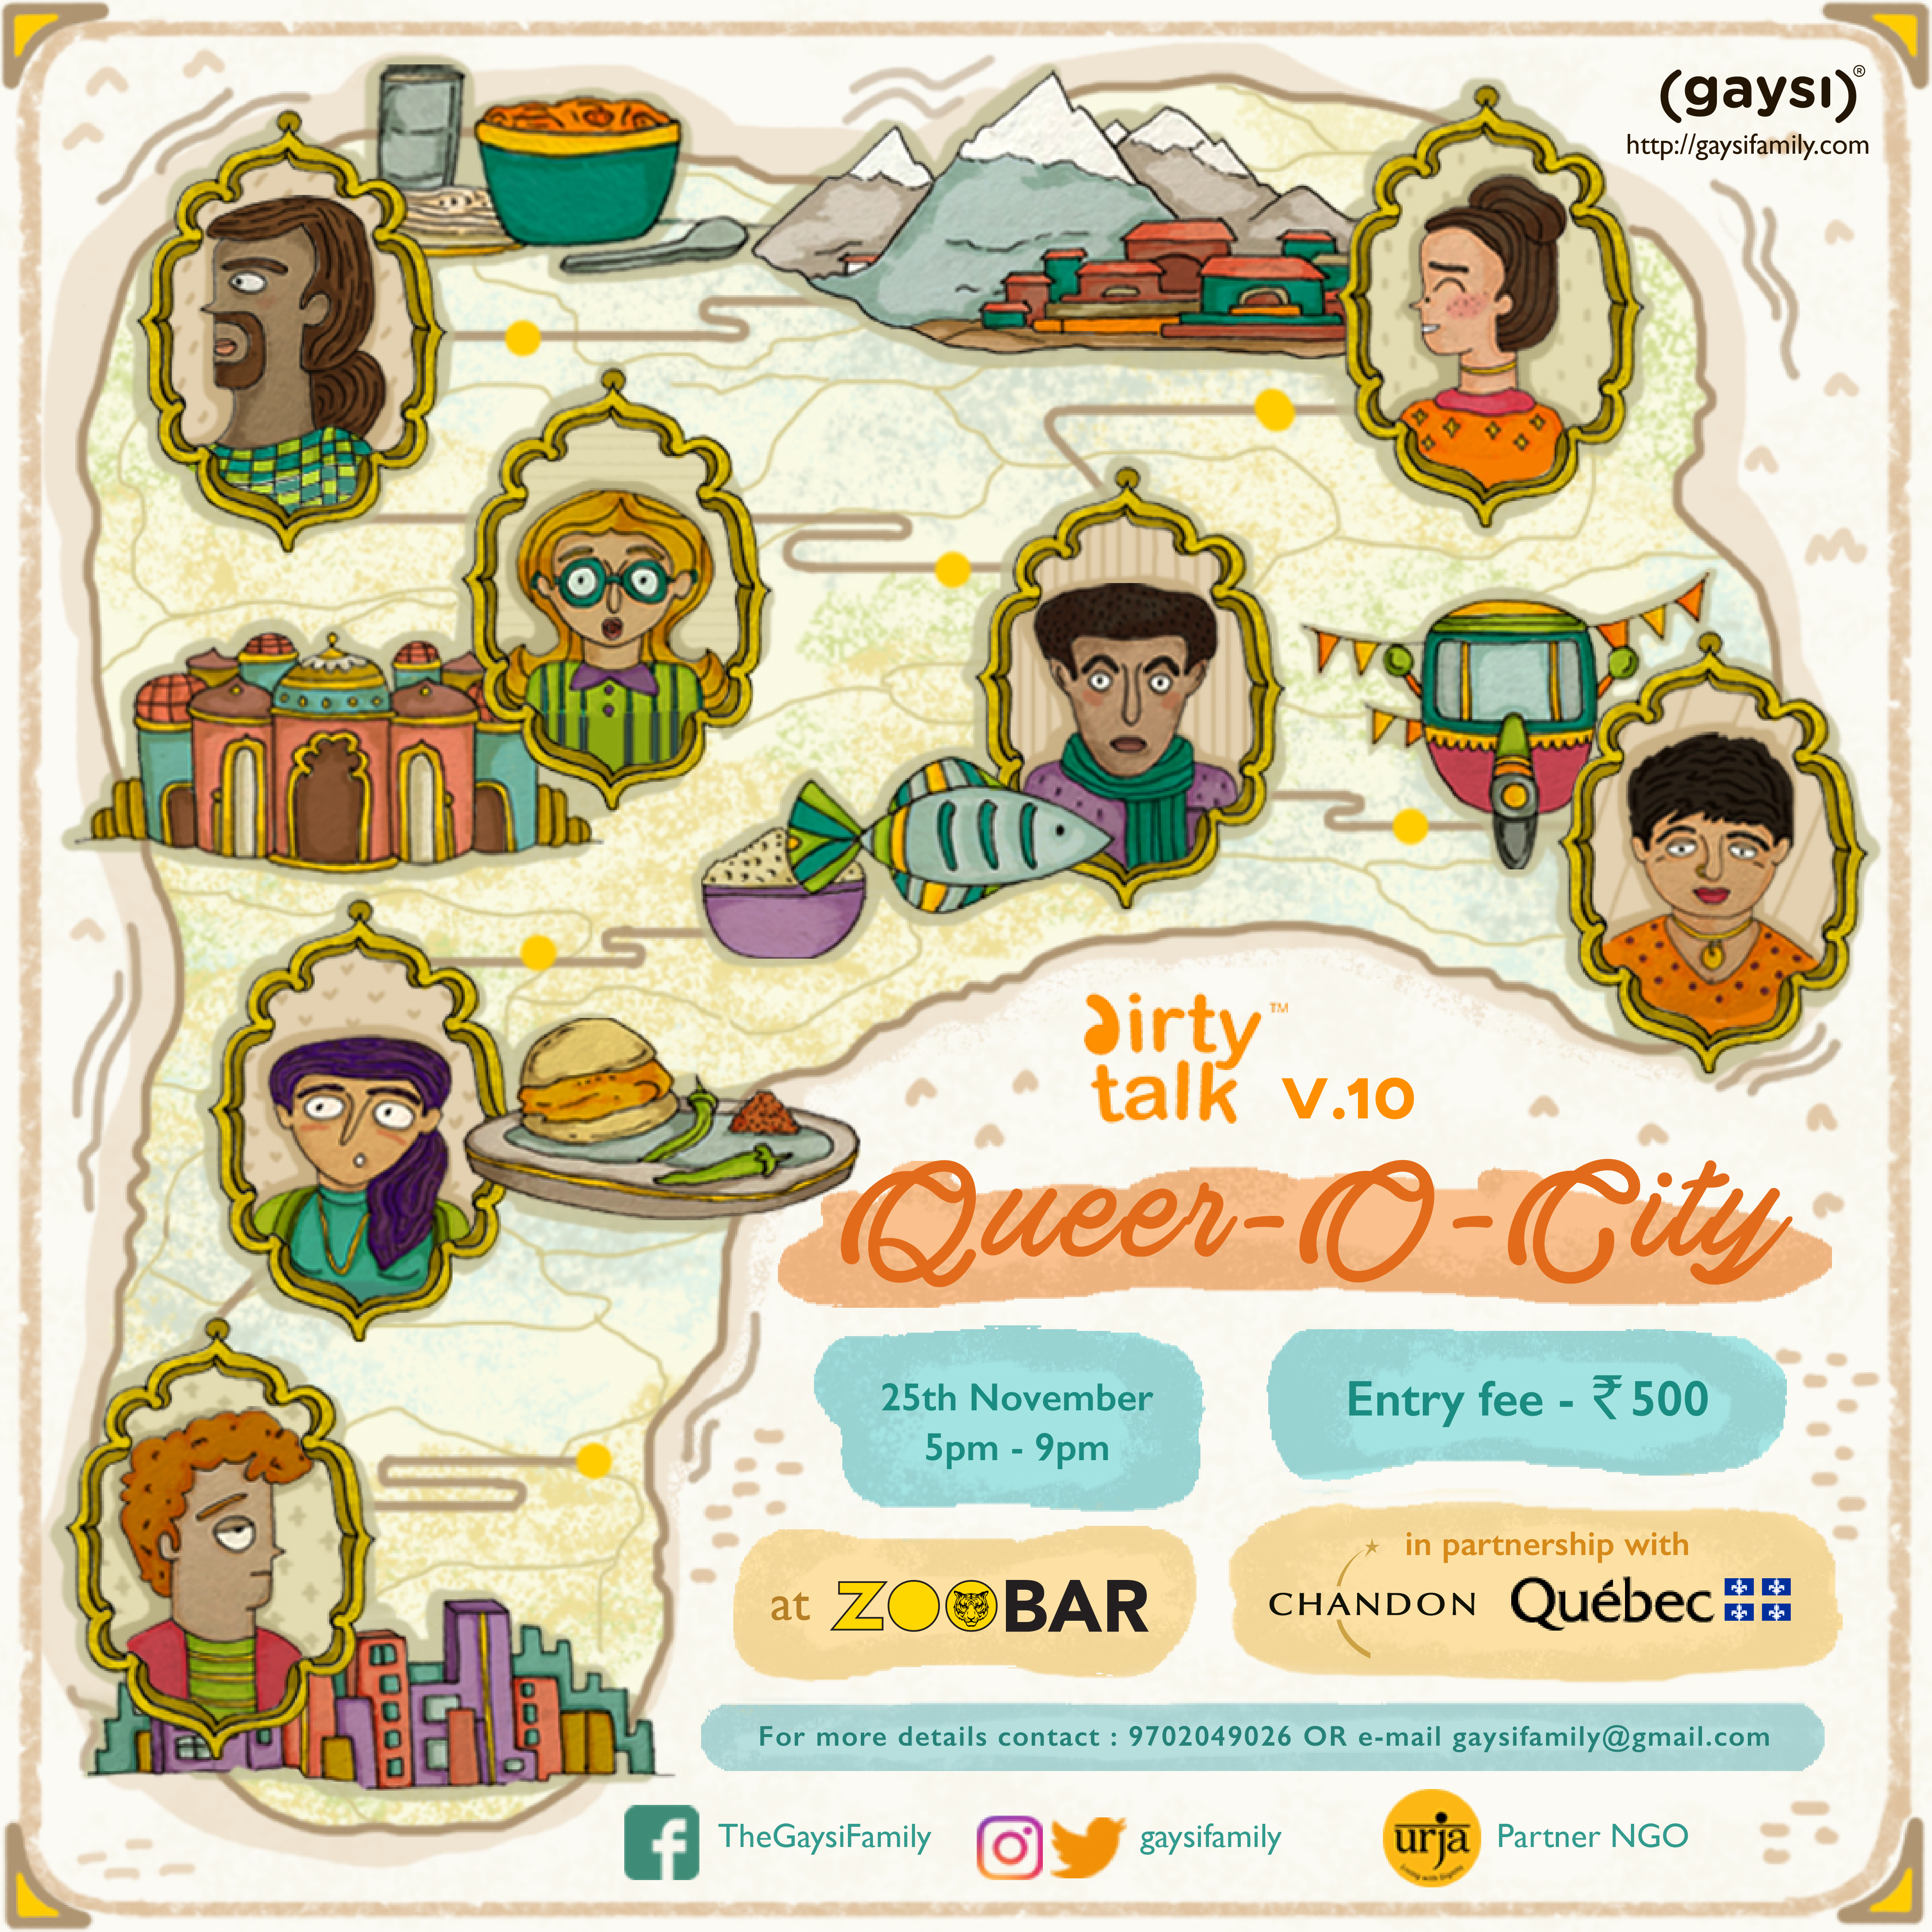 Gaysi Family Presents Dirty Talk 10th Edition (LGBTQ Open Mic) On 25th November